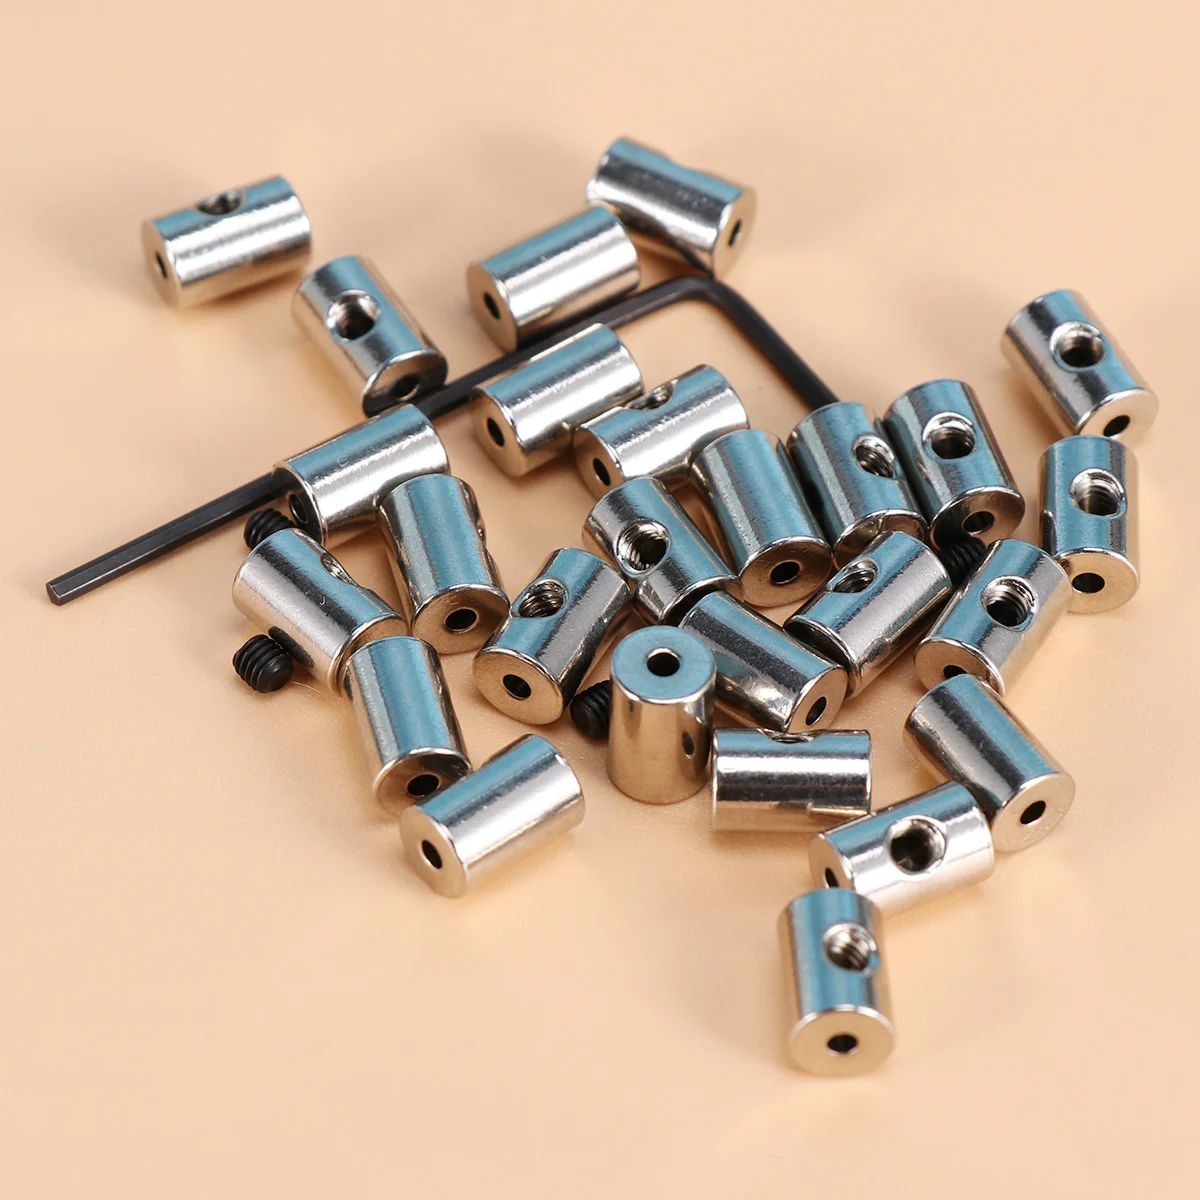 

50pcs Pin Keepers Pin Locks Pin Backs Locking Clasps Set Pin Backs Replacement With